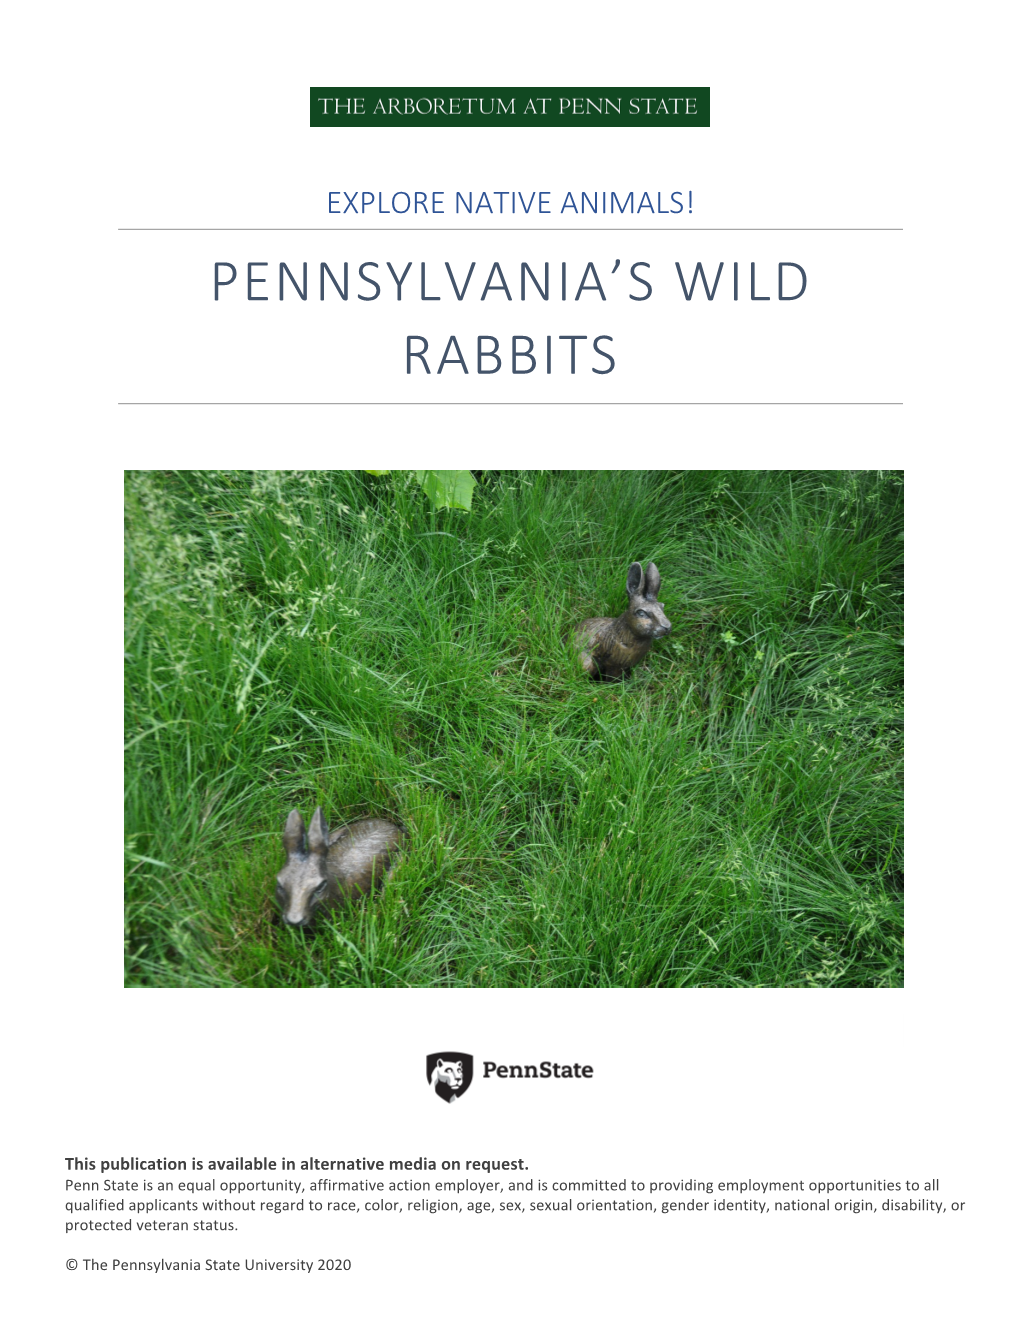 Pennsylvania's Wild Rabbits